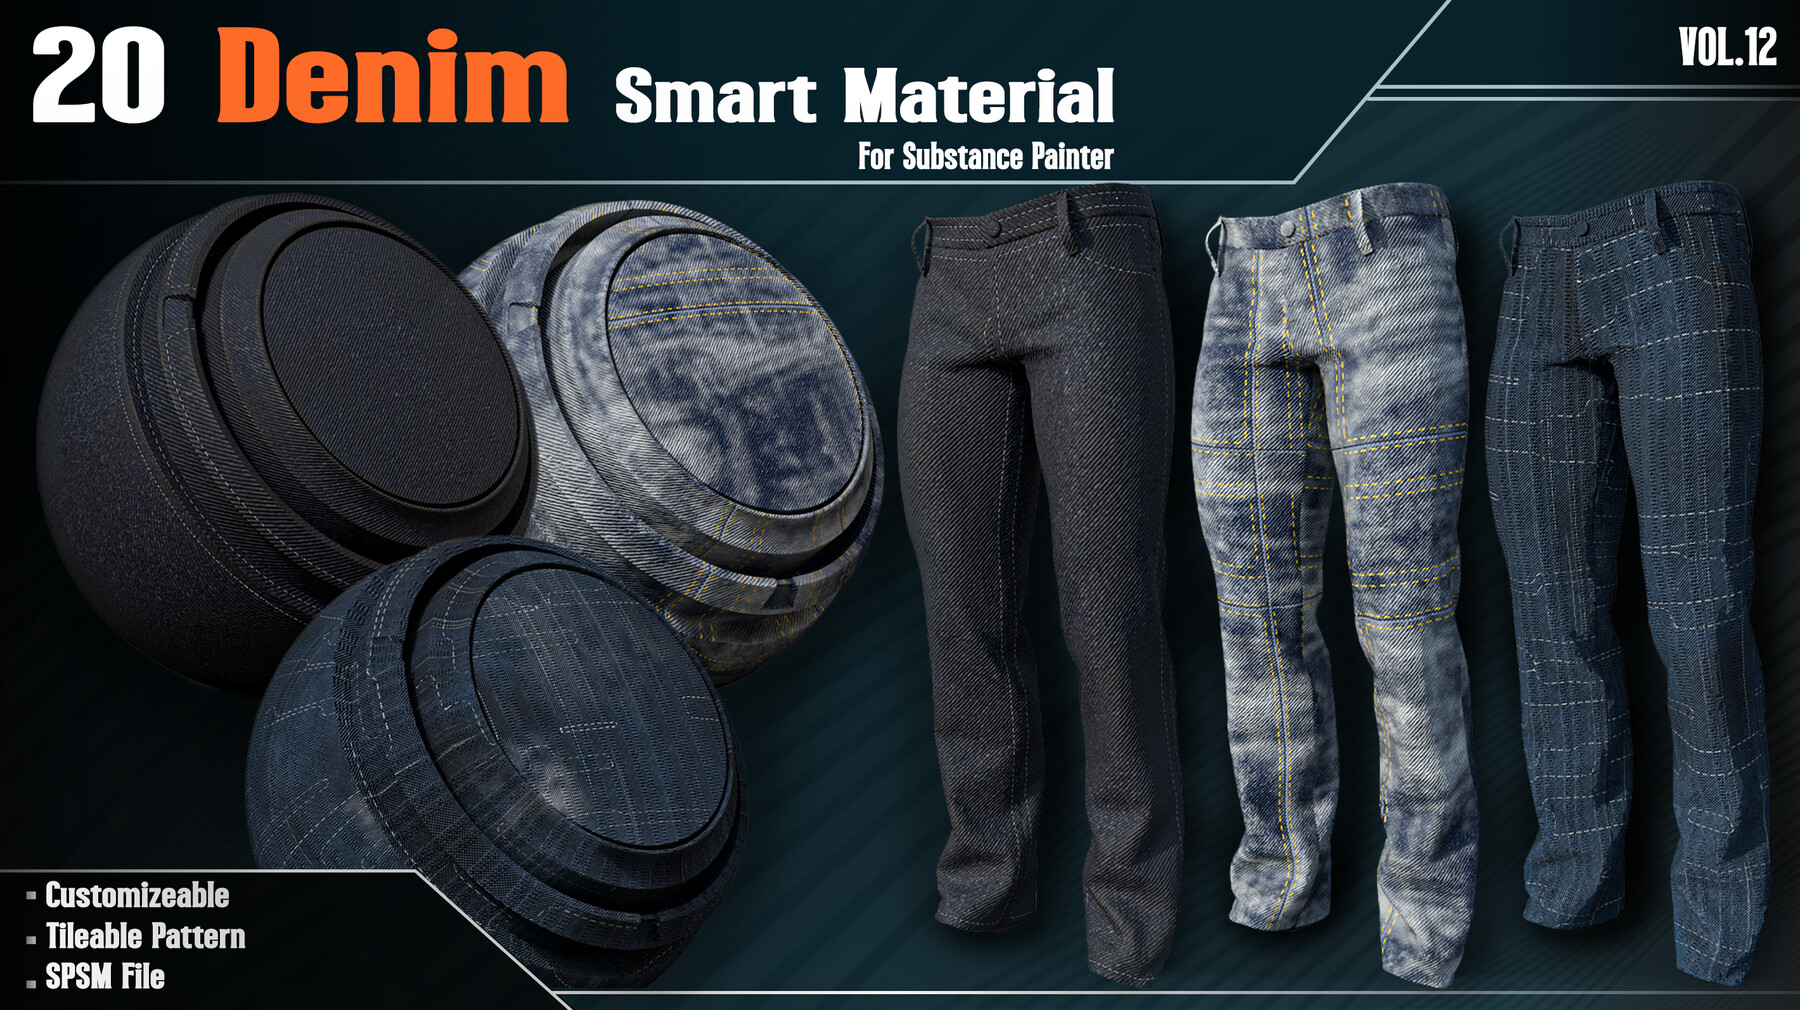 Blue Jeans Denim Fabric Material Stock Photo 390537739 | Shutterstock